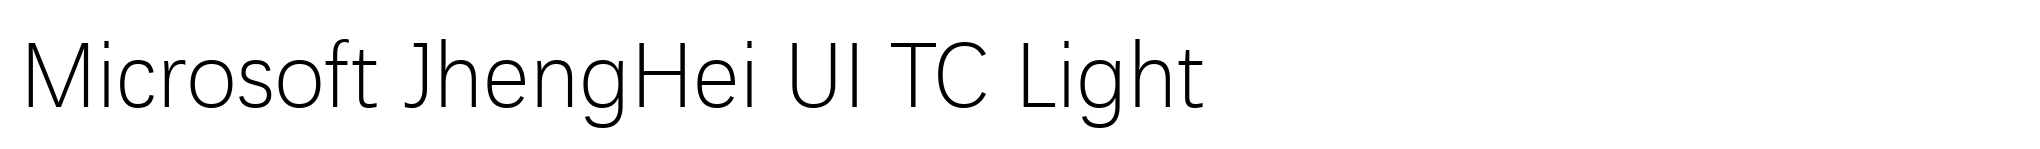 Microsoft JhengHei UI TC Light image